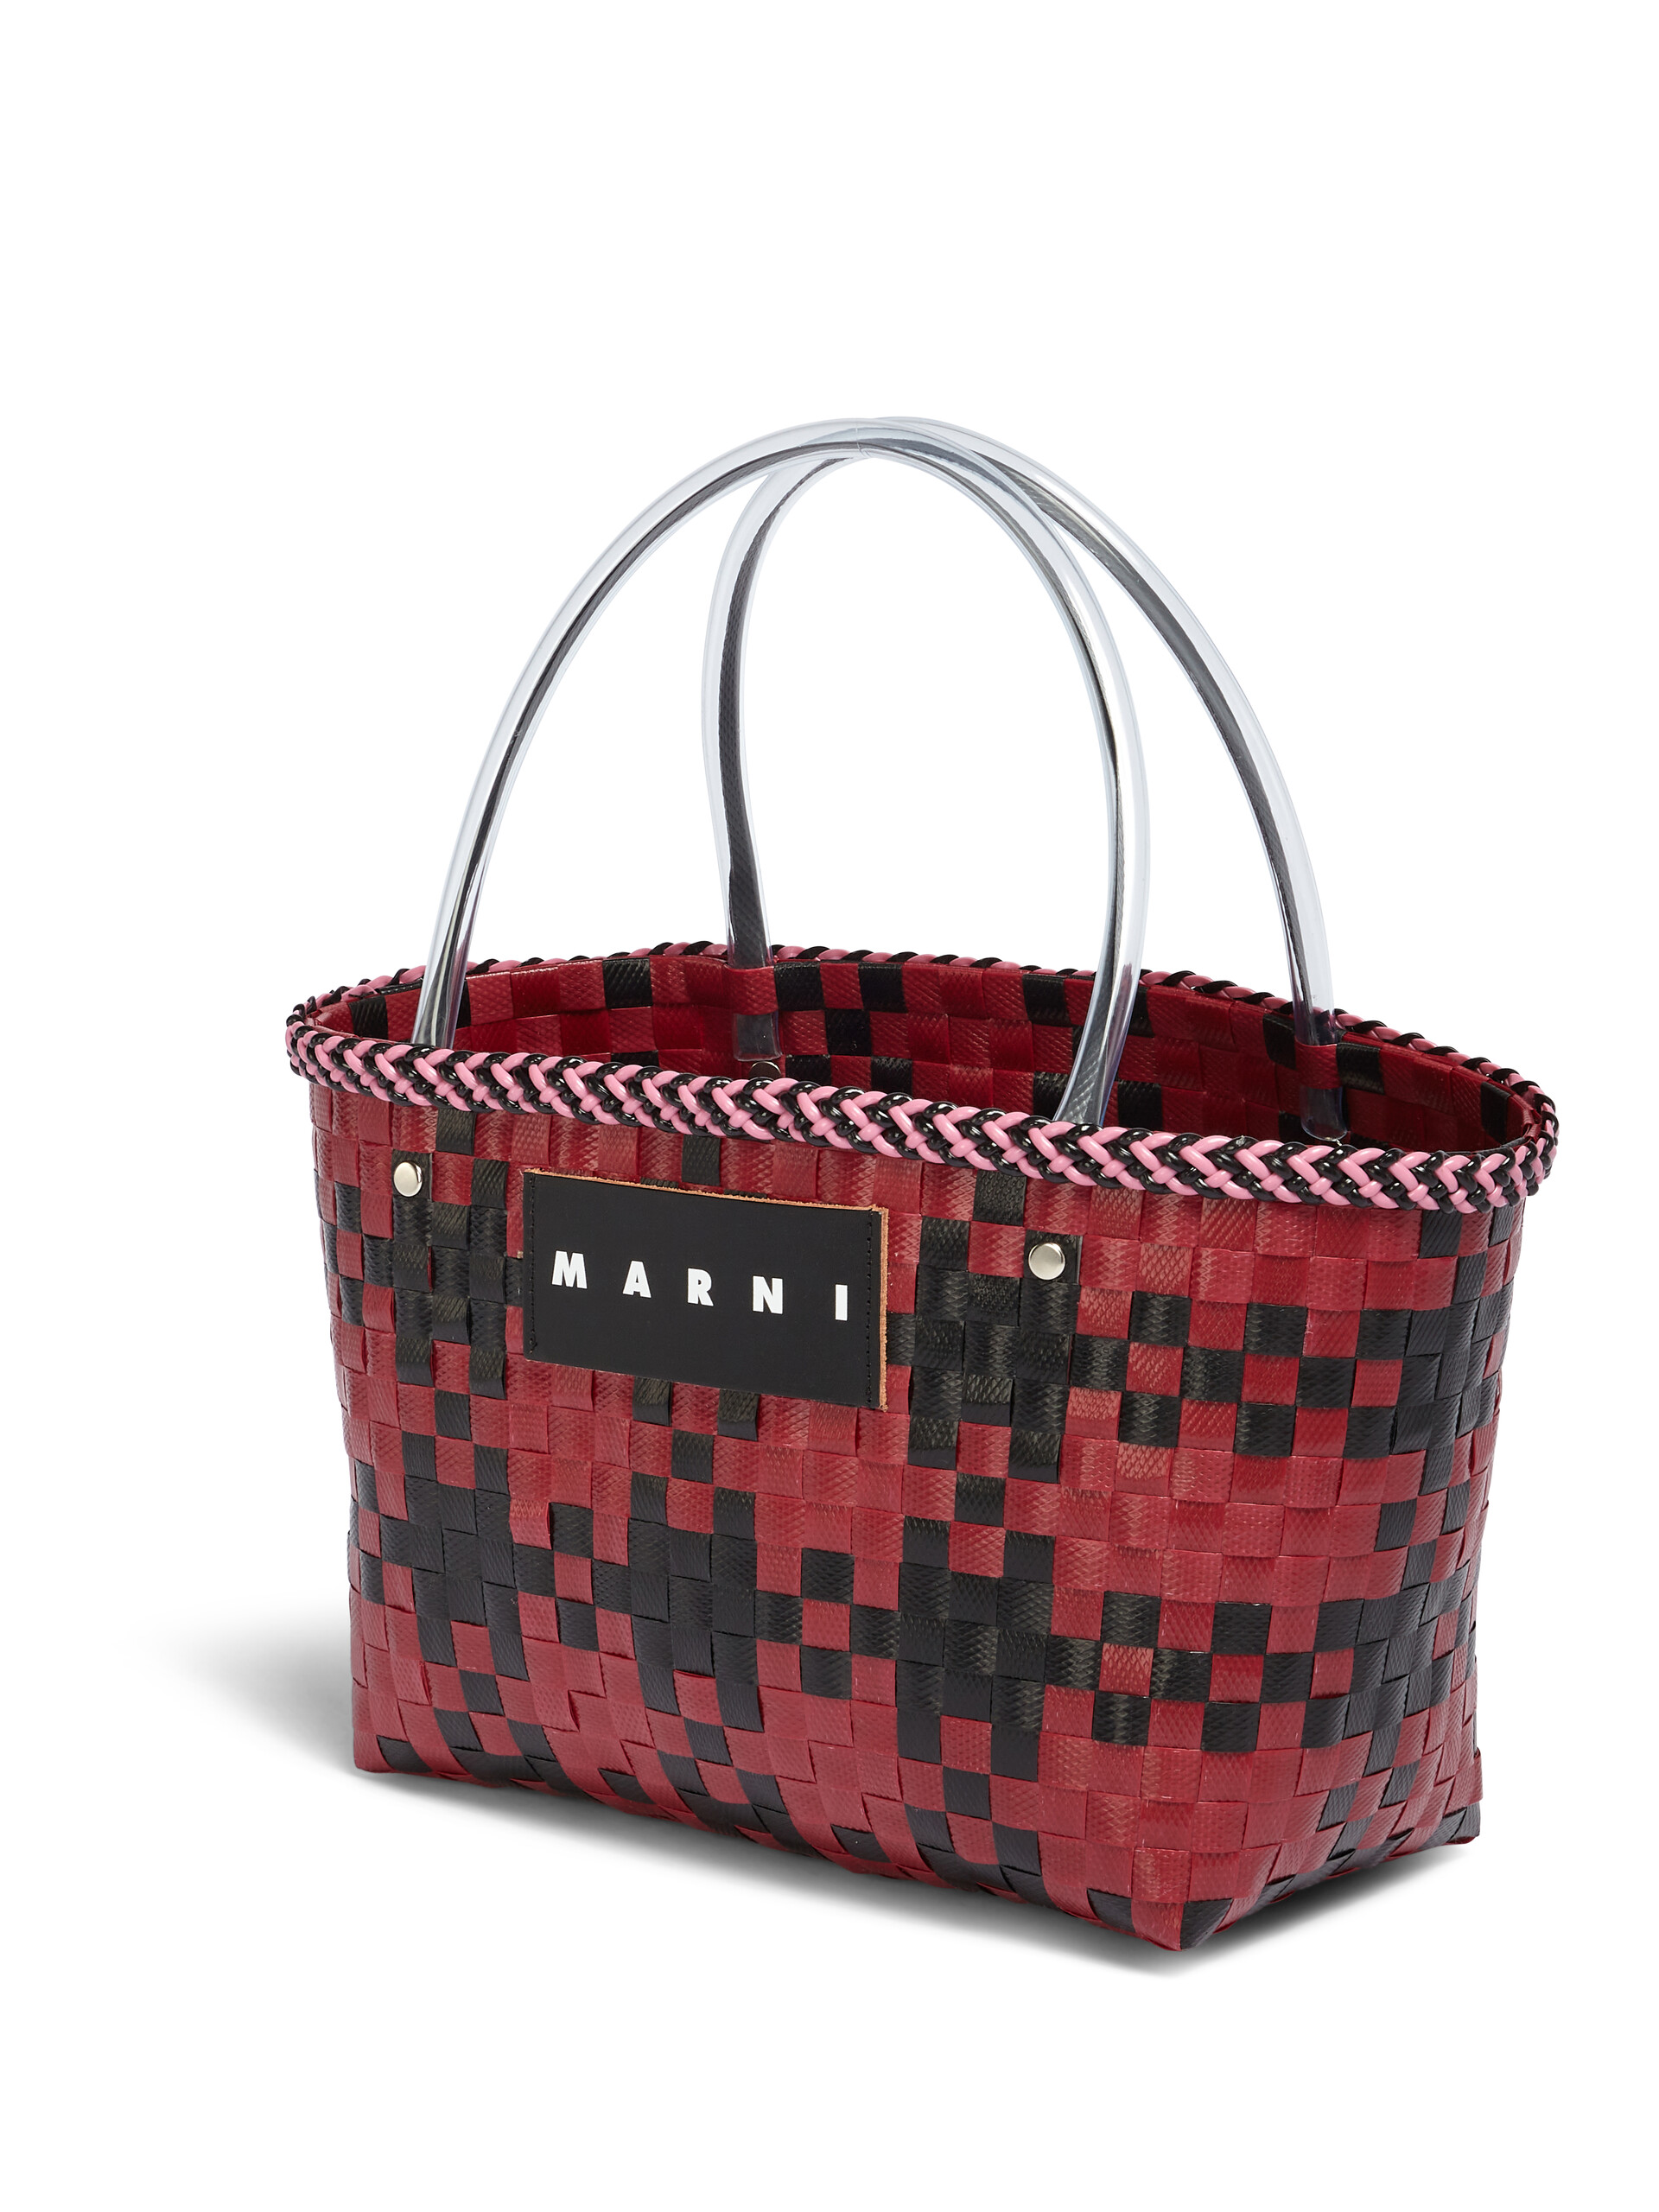 MARNI MARKET CHECK BAG in burgundy tartan woven material - Bags - Image 4